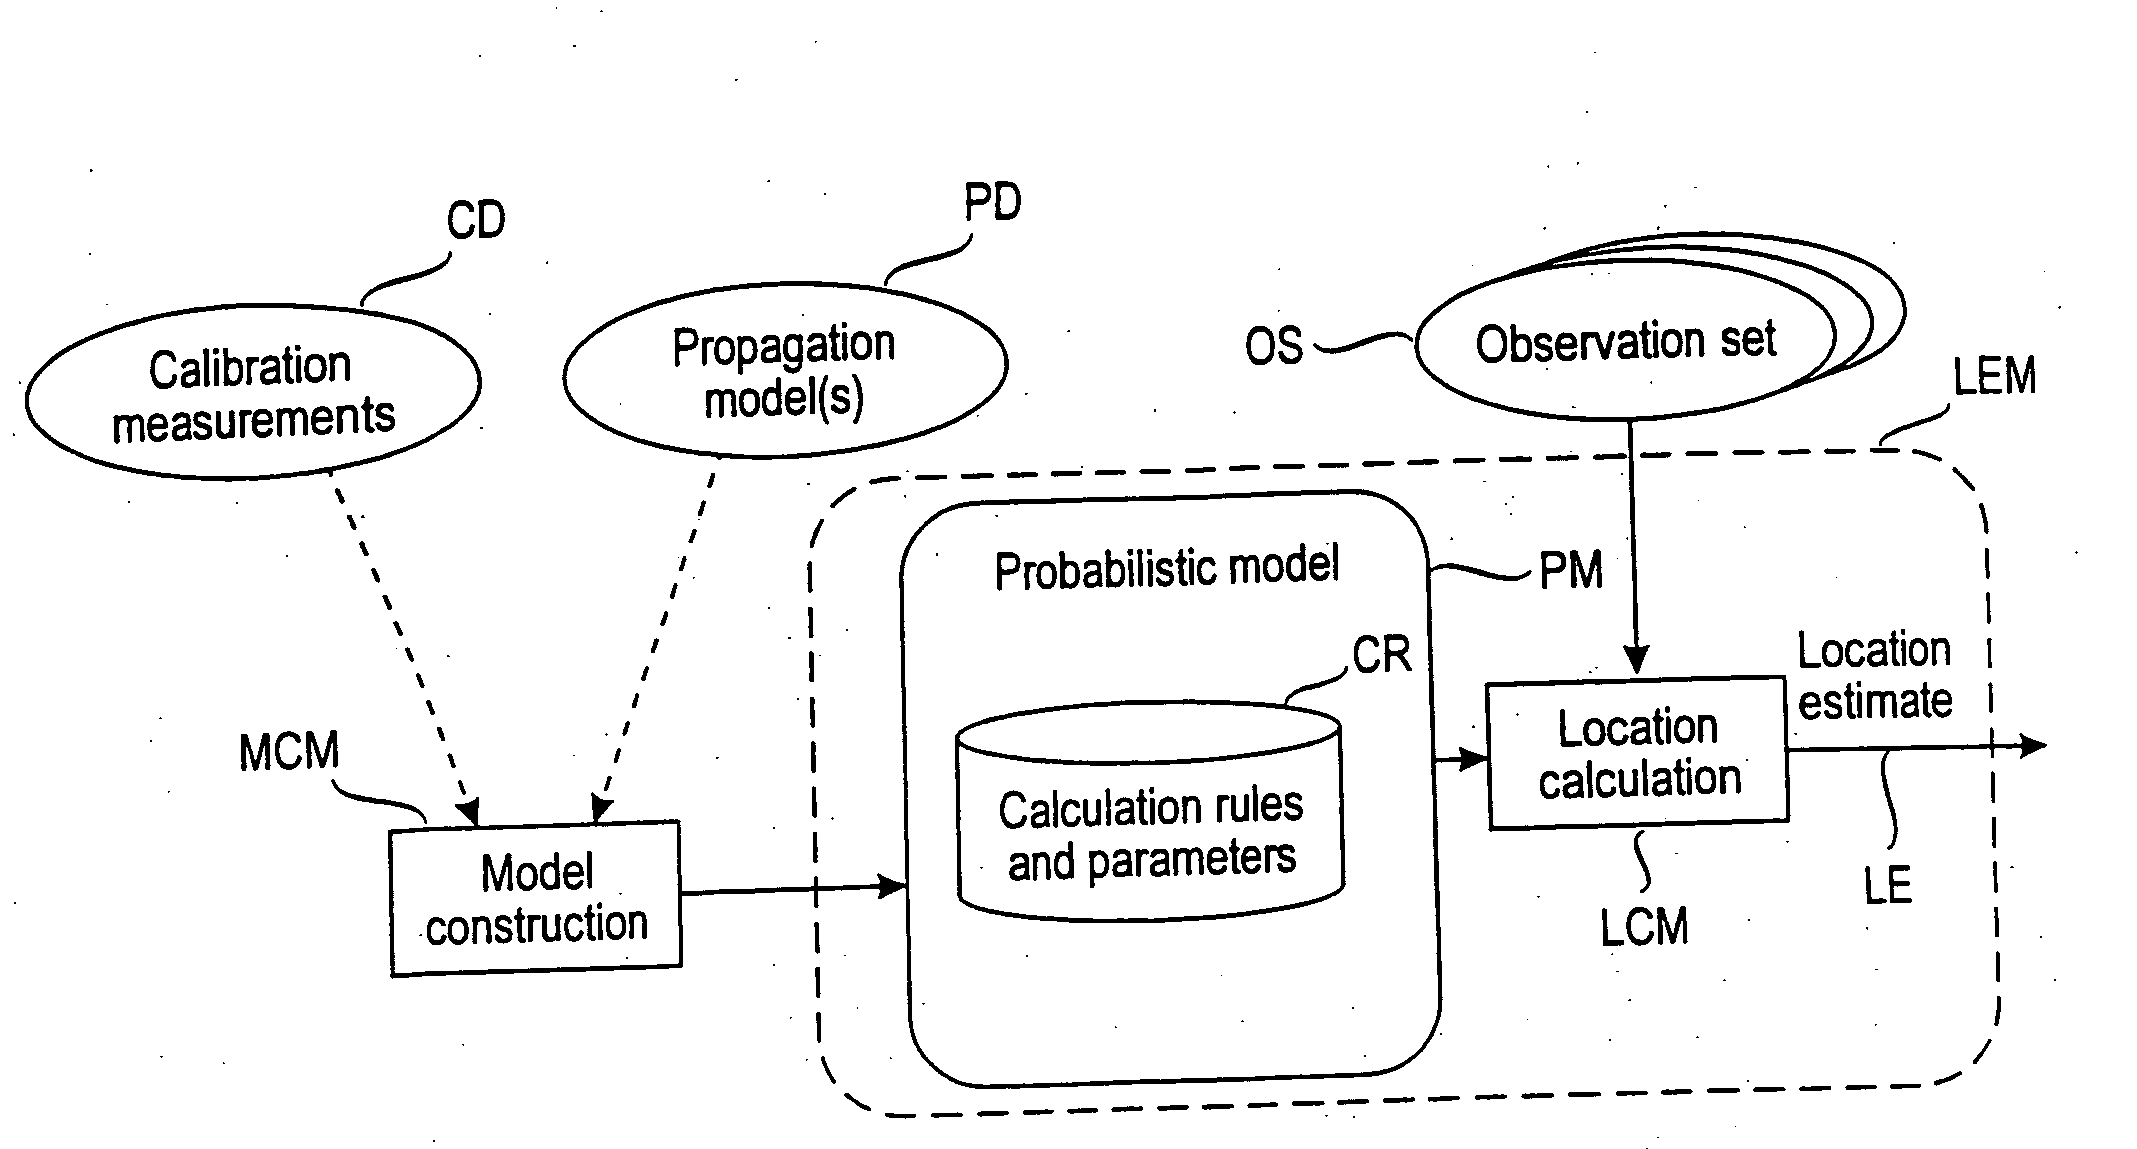 Probabilistic model for a positioning technique